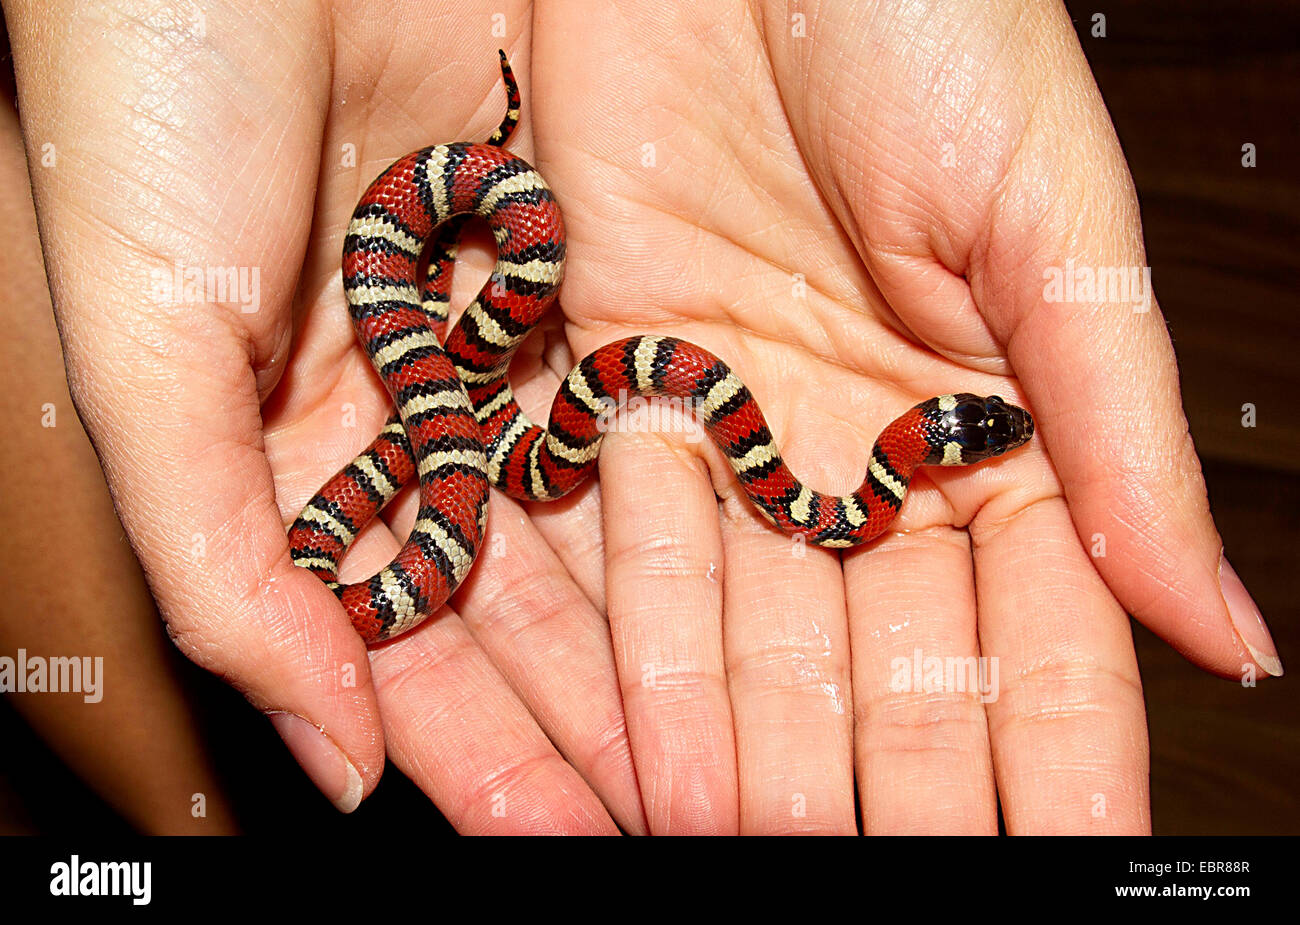 milk snake, eastern milk snake (Lampropeltis triangulum), young milk snake on hands Stock Photo